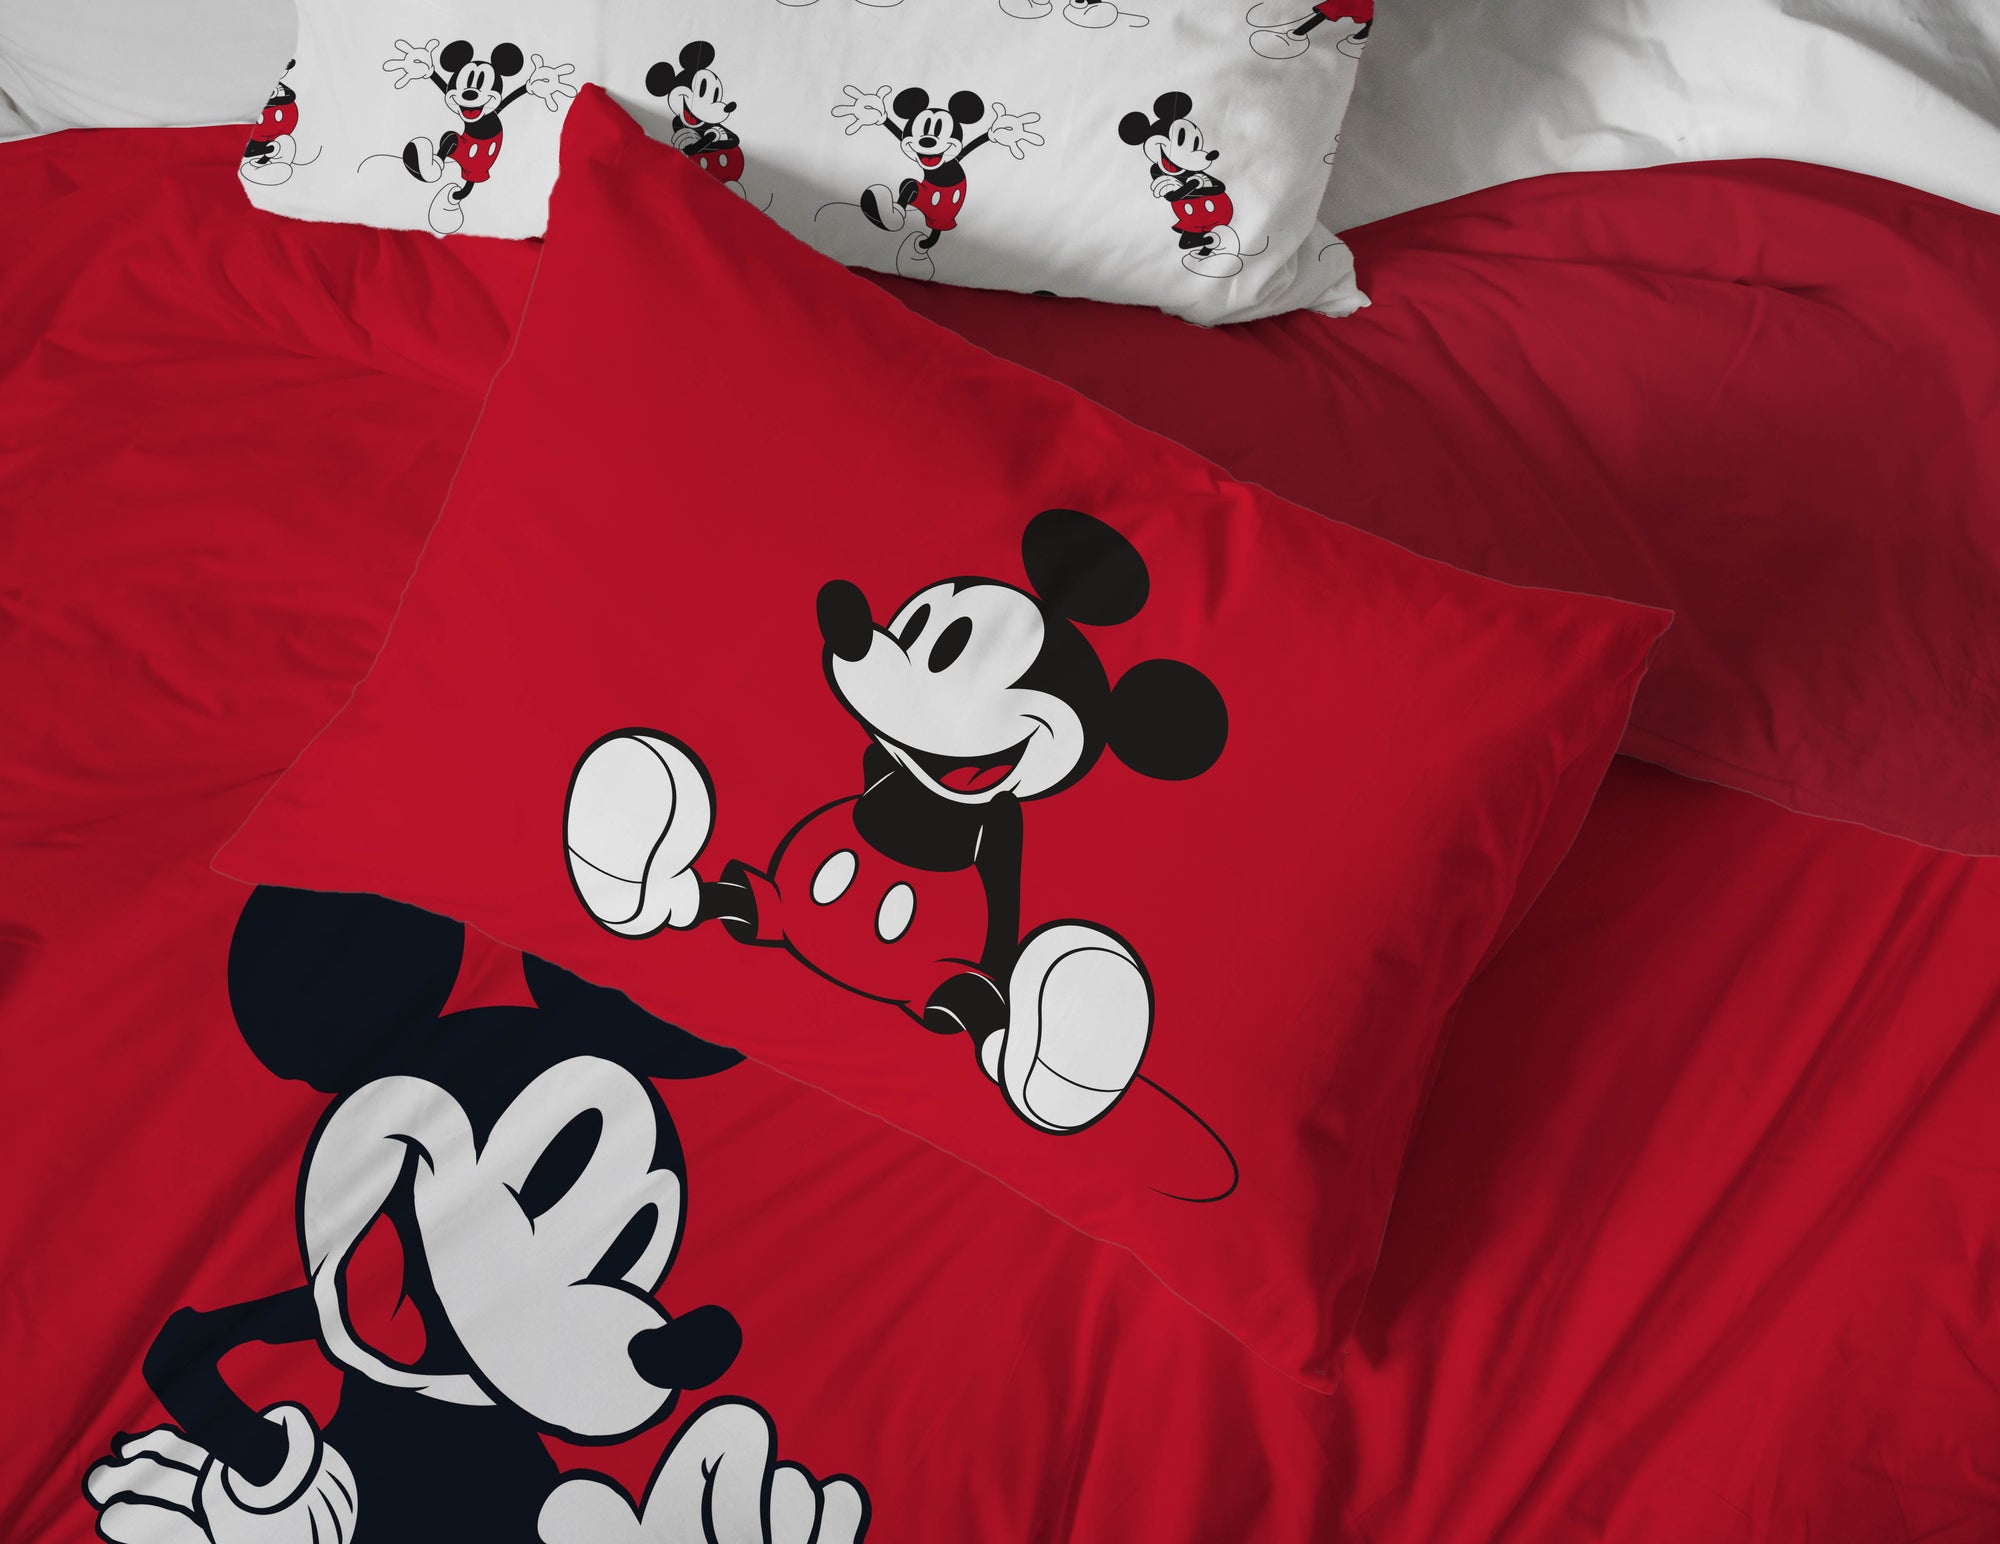 Saturday Park Disney Mickey Mouse Classic 100% Organic Cotton Duvet & Sham Set